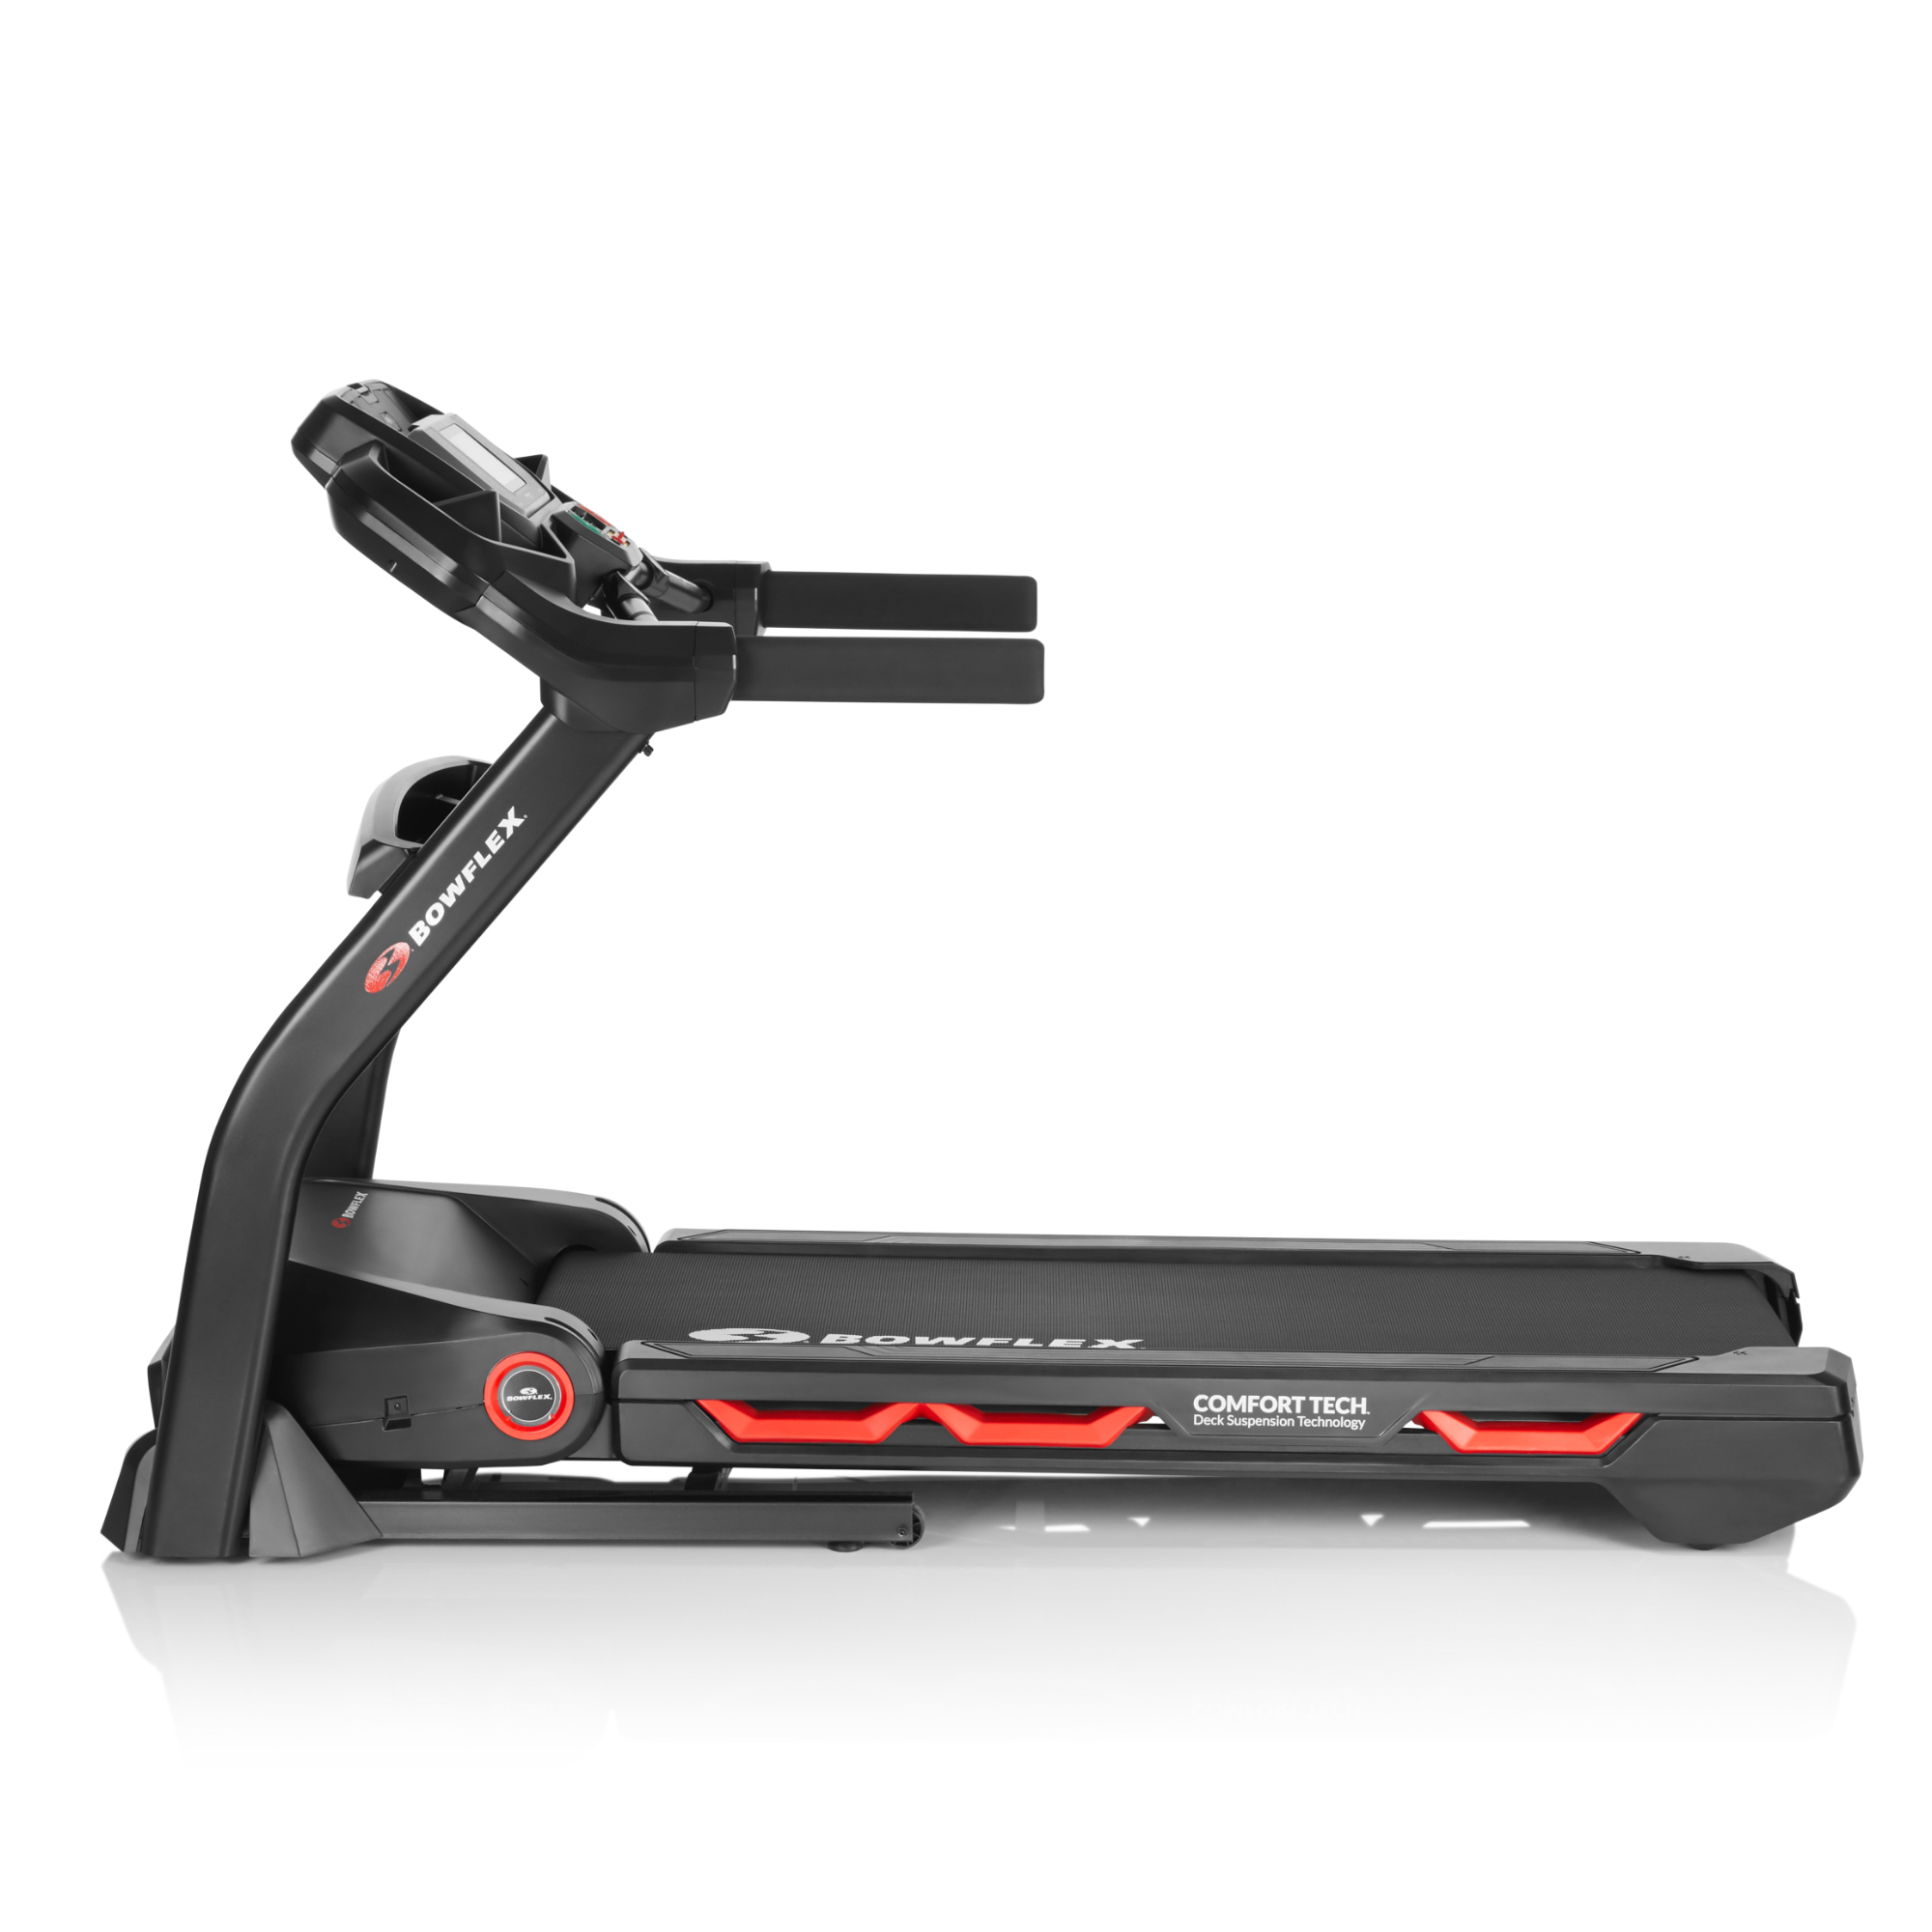 Bowflex Treadmill 7, 15% Motorized Max Incline, HD Touchscreen, Bluetooth Enabled, 375 lb Max Capacity, Free 1-Year JRNY Membership - image 2 of 12